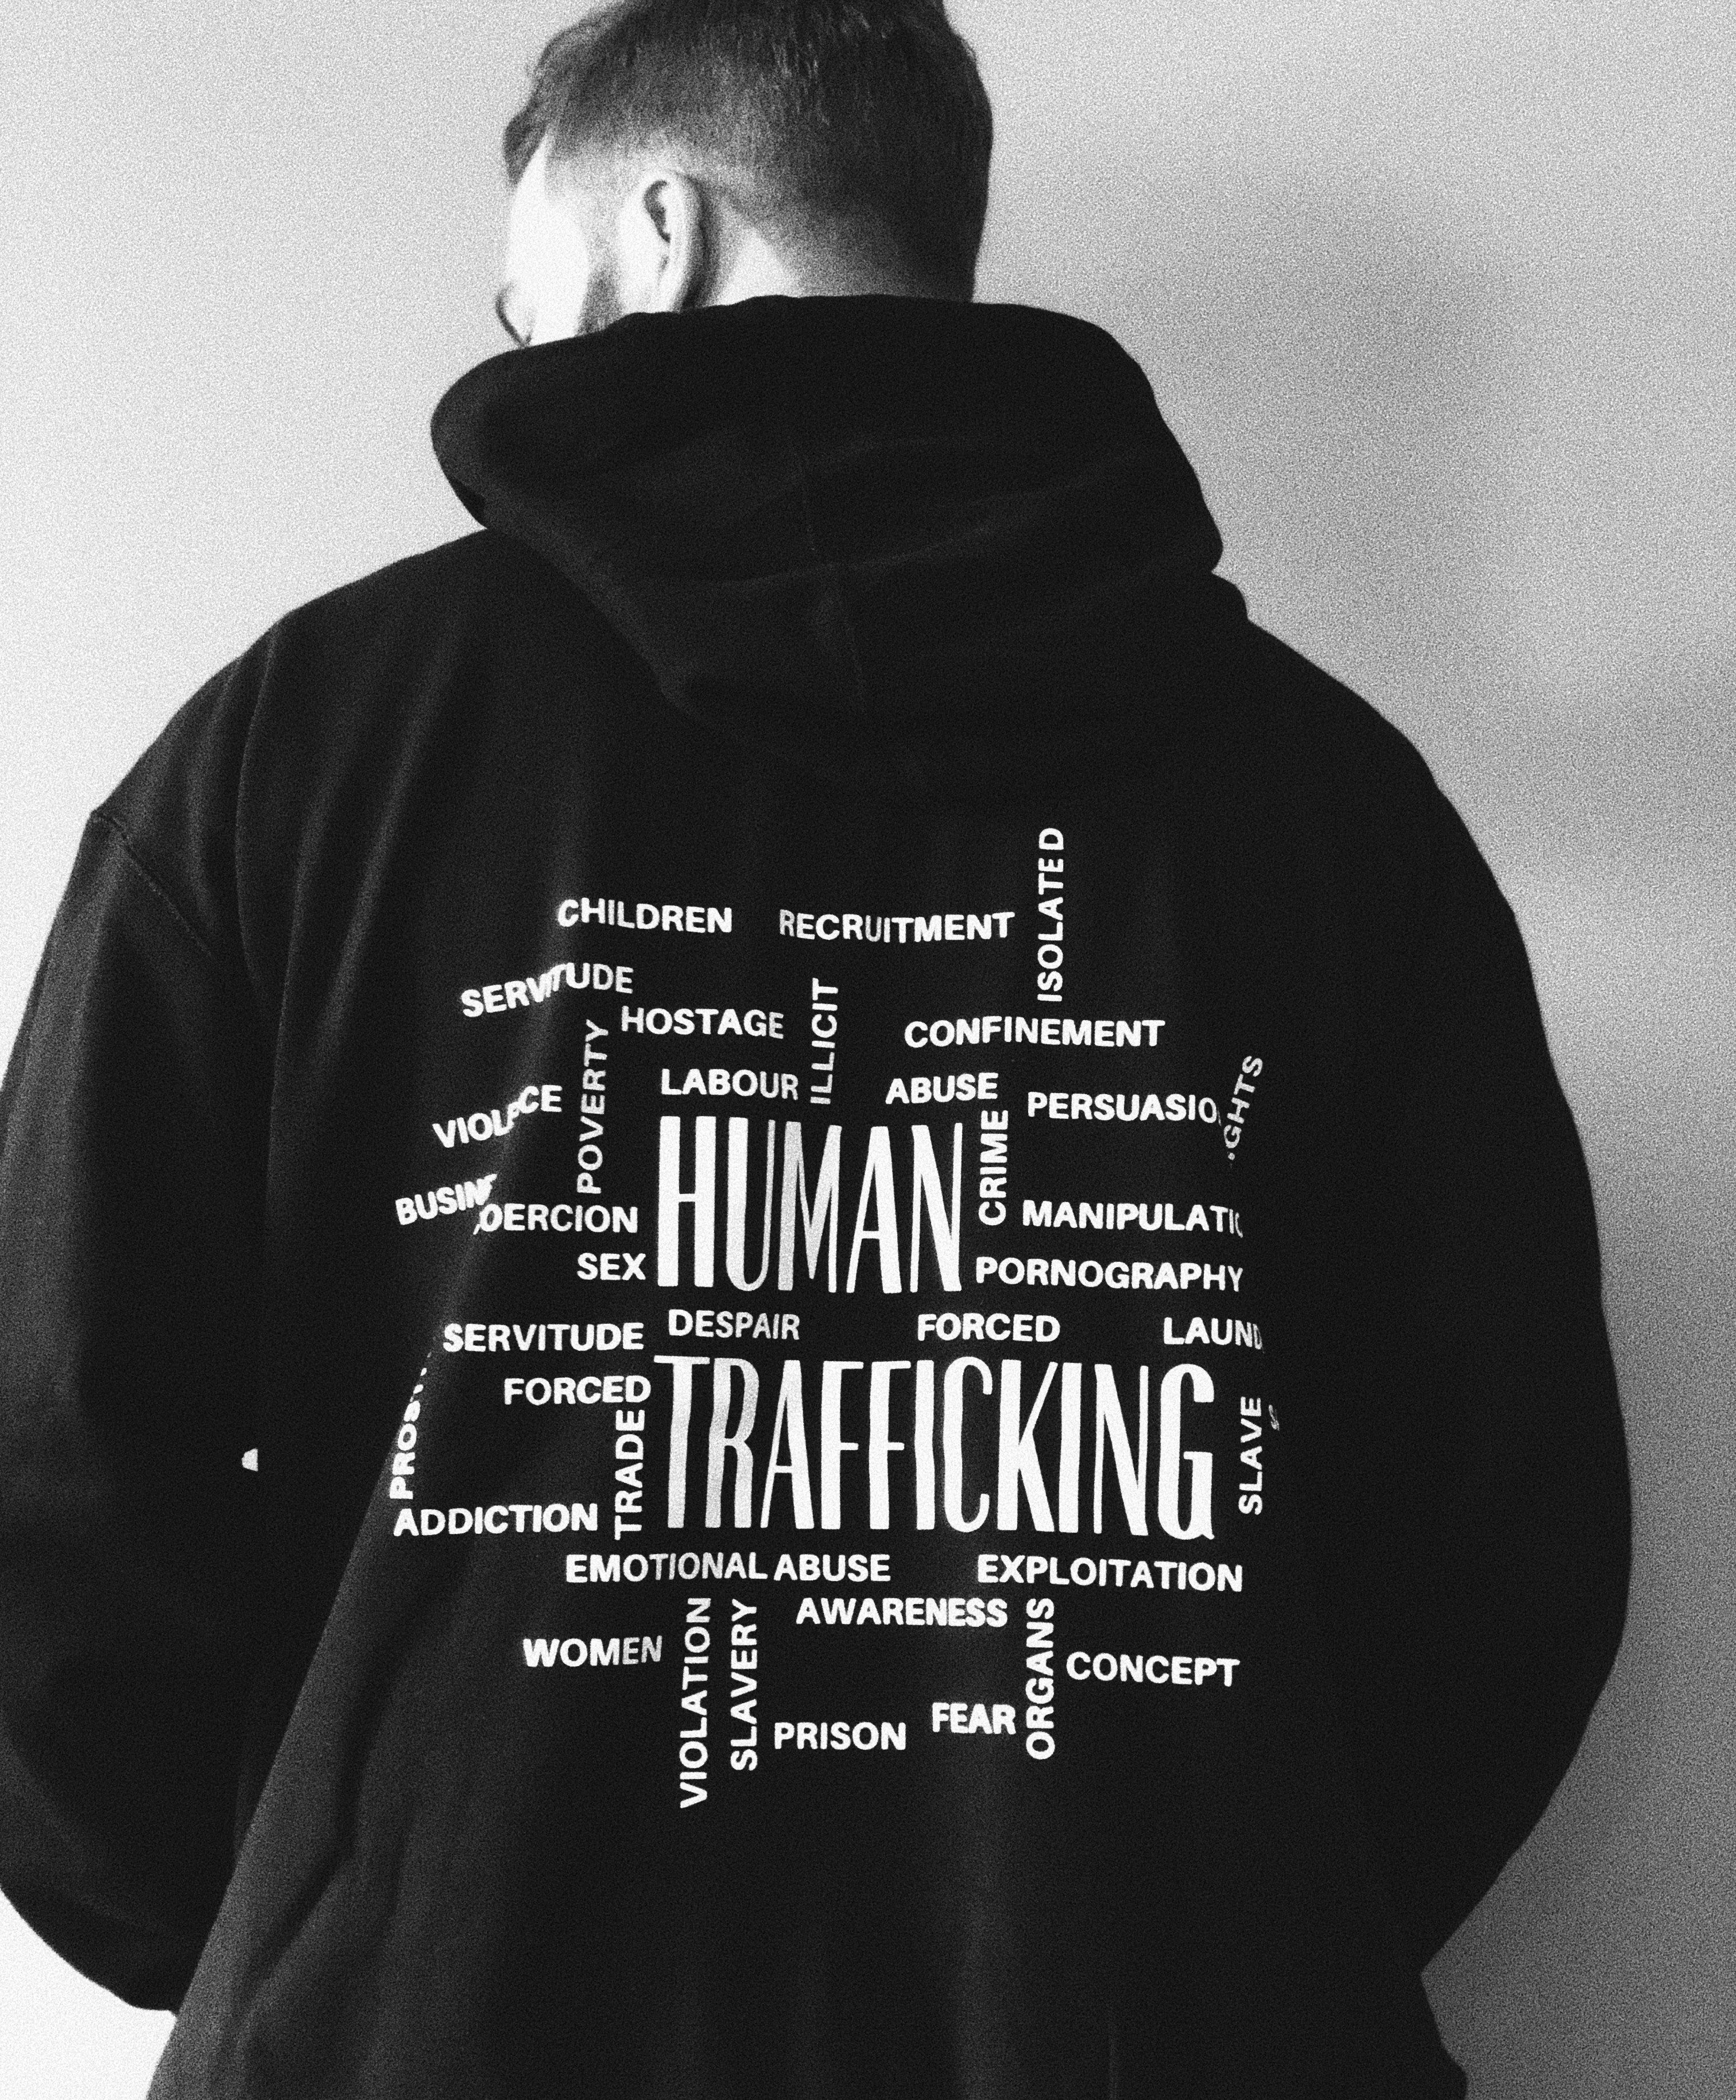 Human Trafficking Survivor's Presentation Saturday